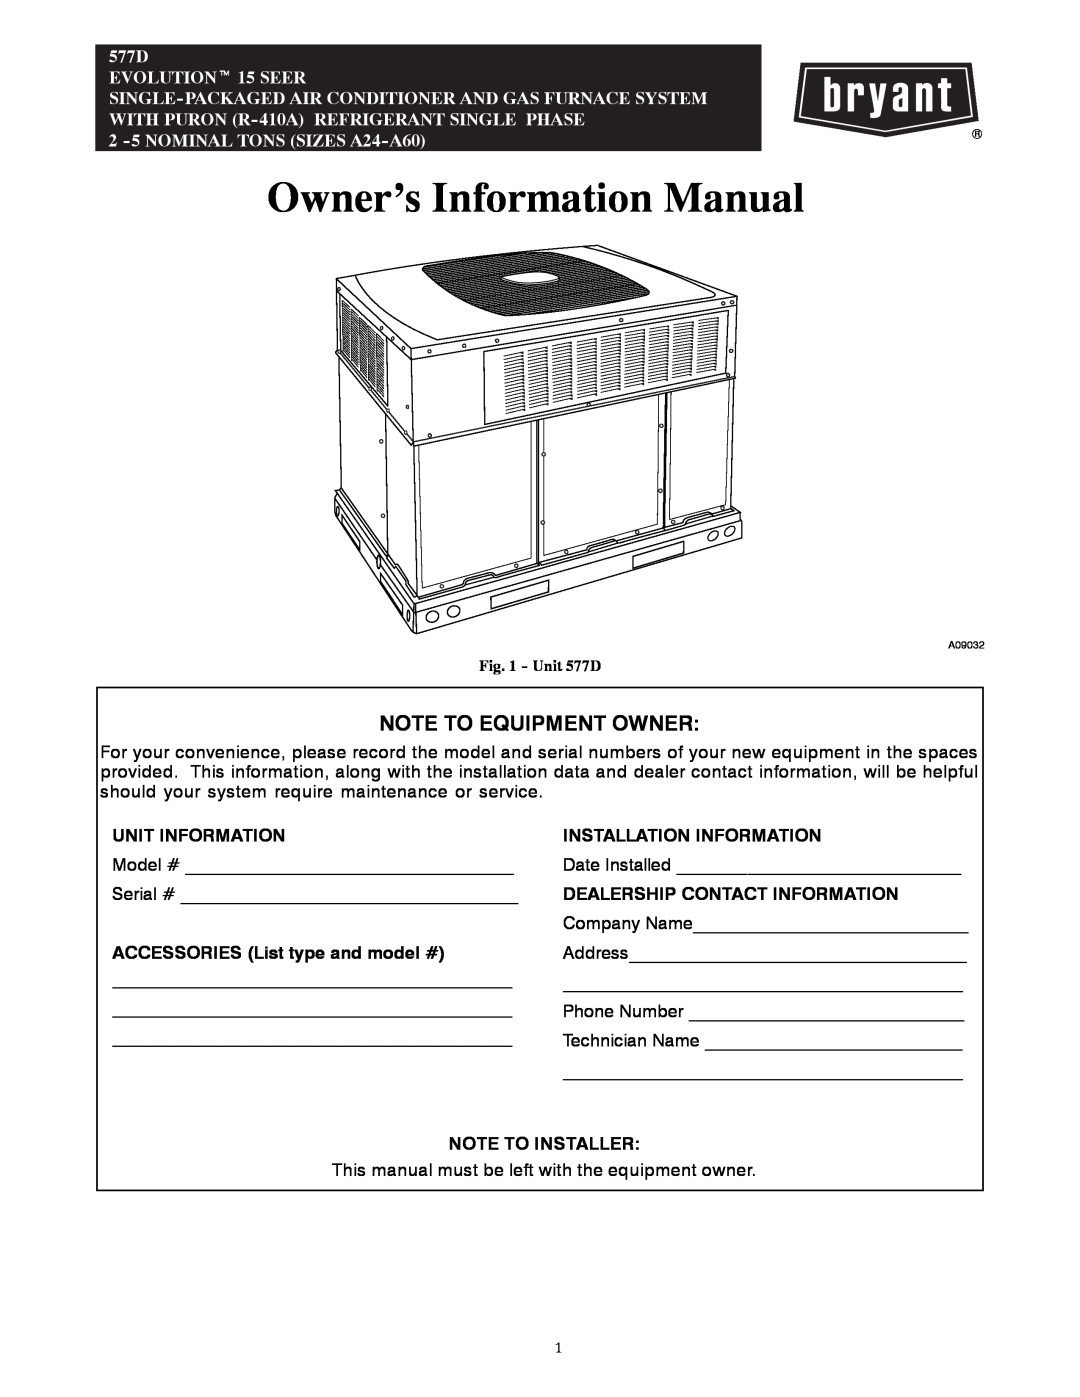 Bryant manual Owner’s Information Manual, Note To Equipment Owner, 577D EVOLUTIONt 15 SEER, Unit Information 